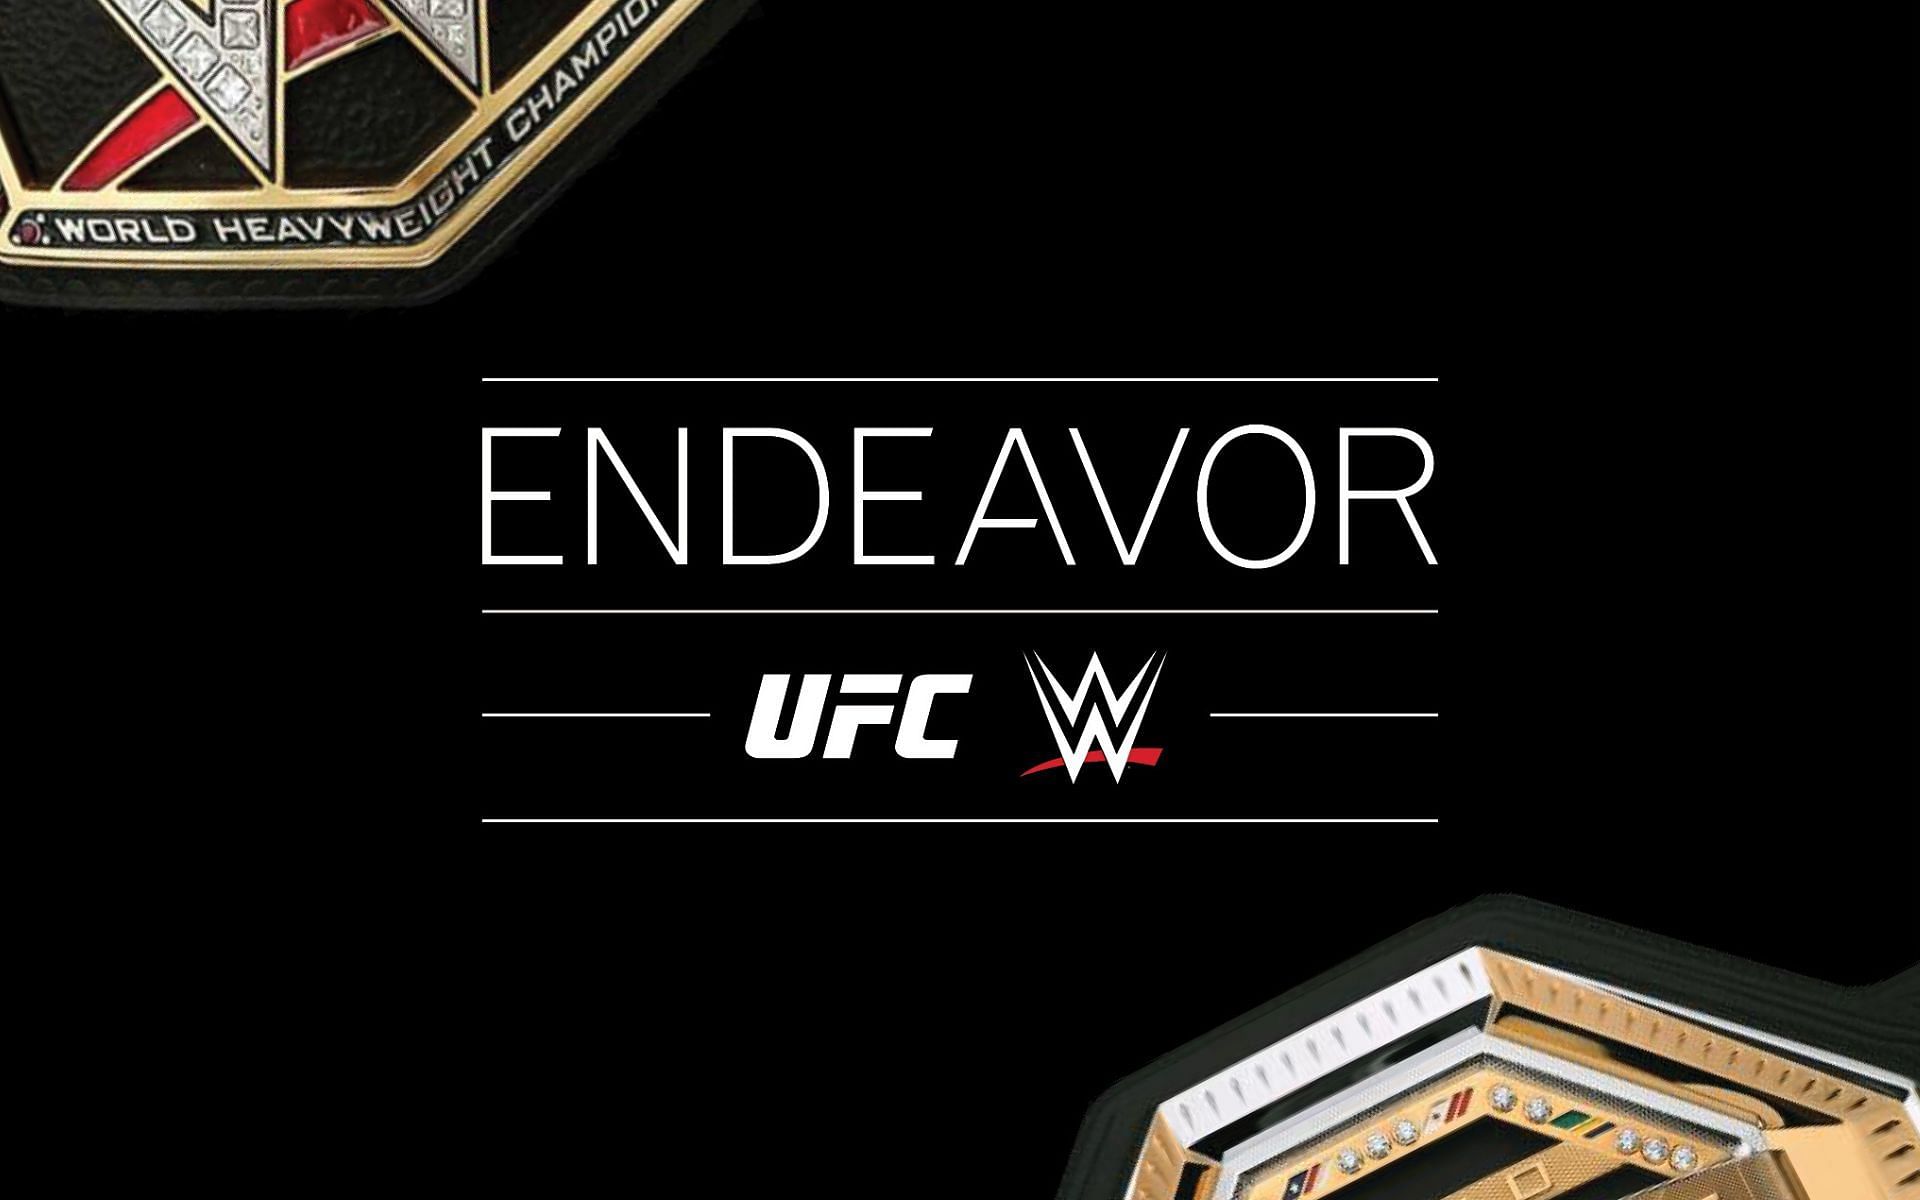 Endeavor - UFC and WWE merger [Image courtesy: www.endeavor.com]